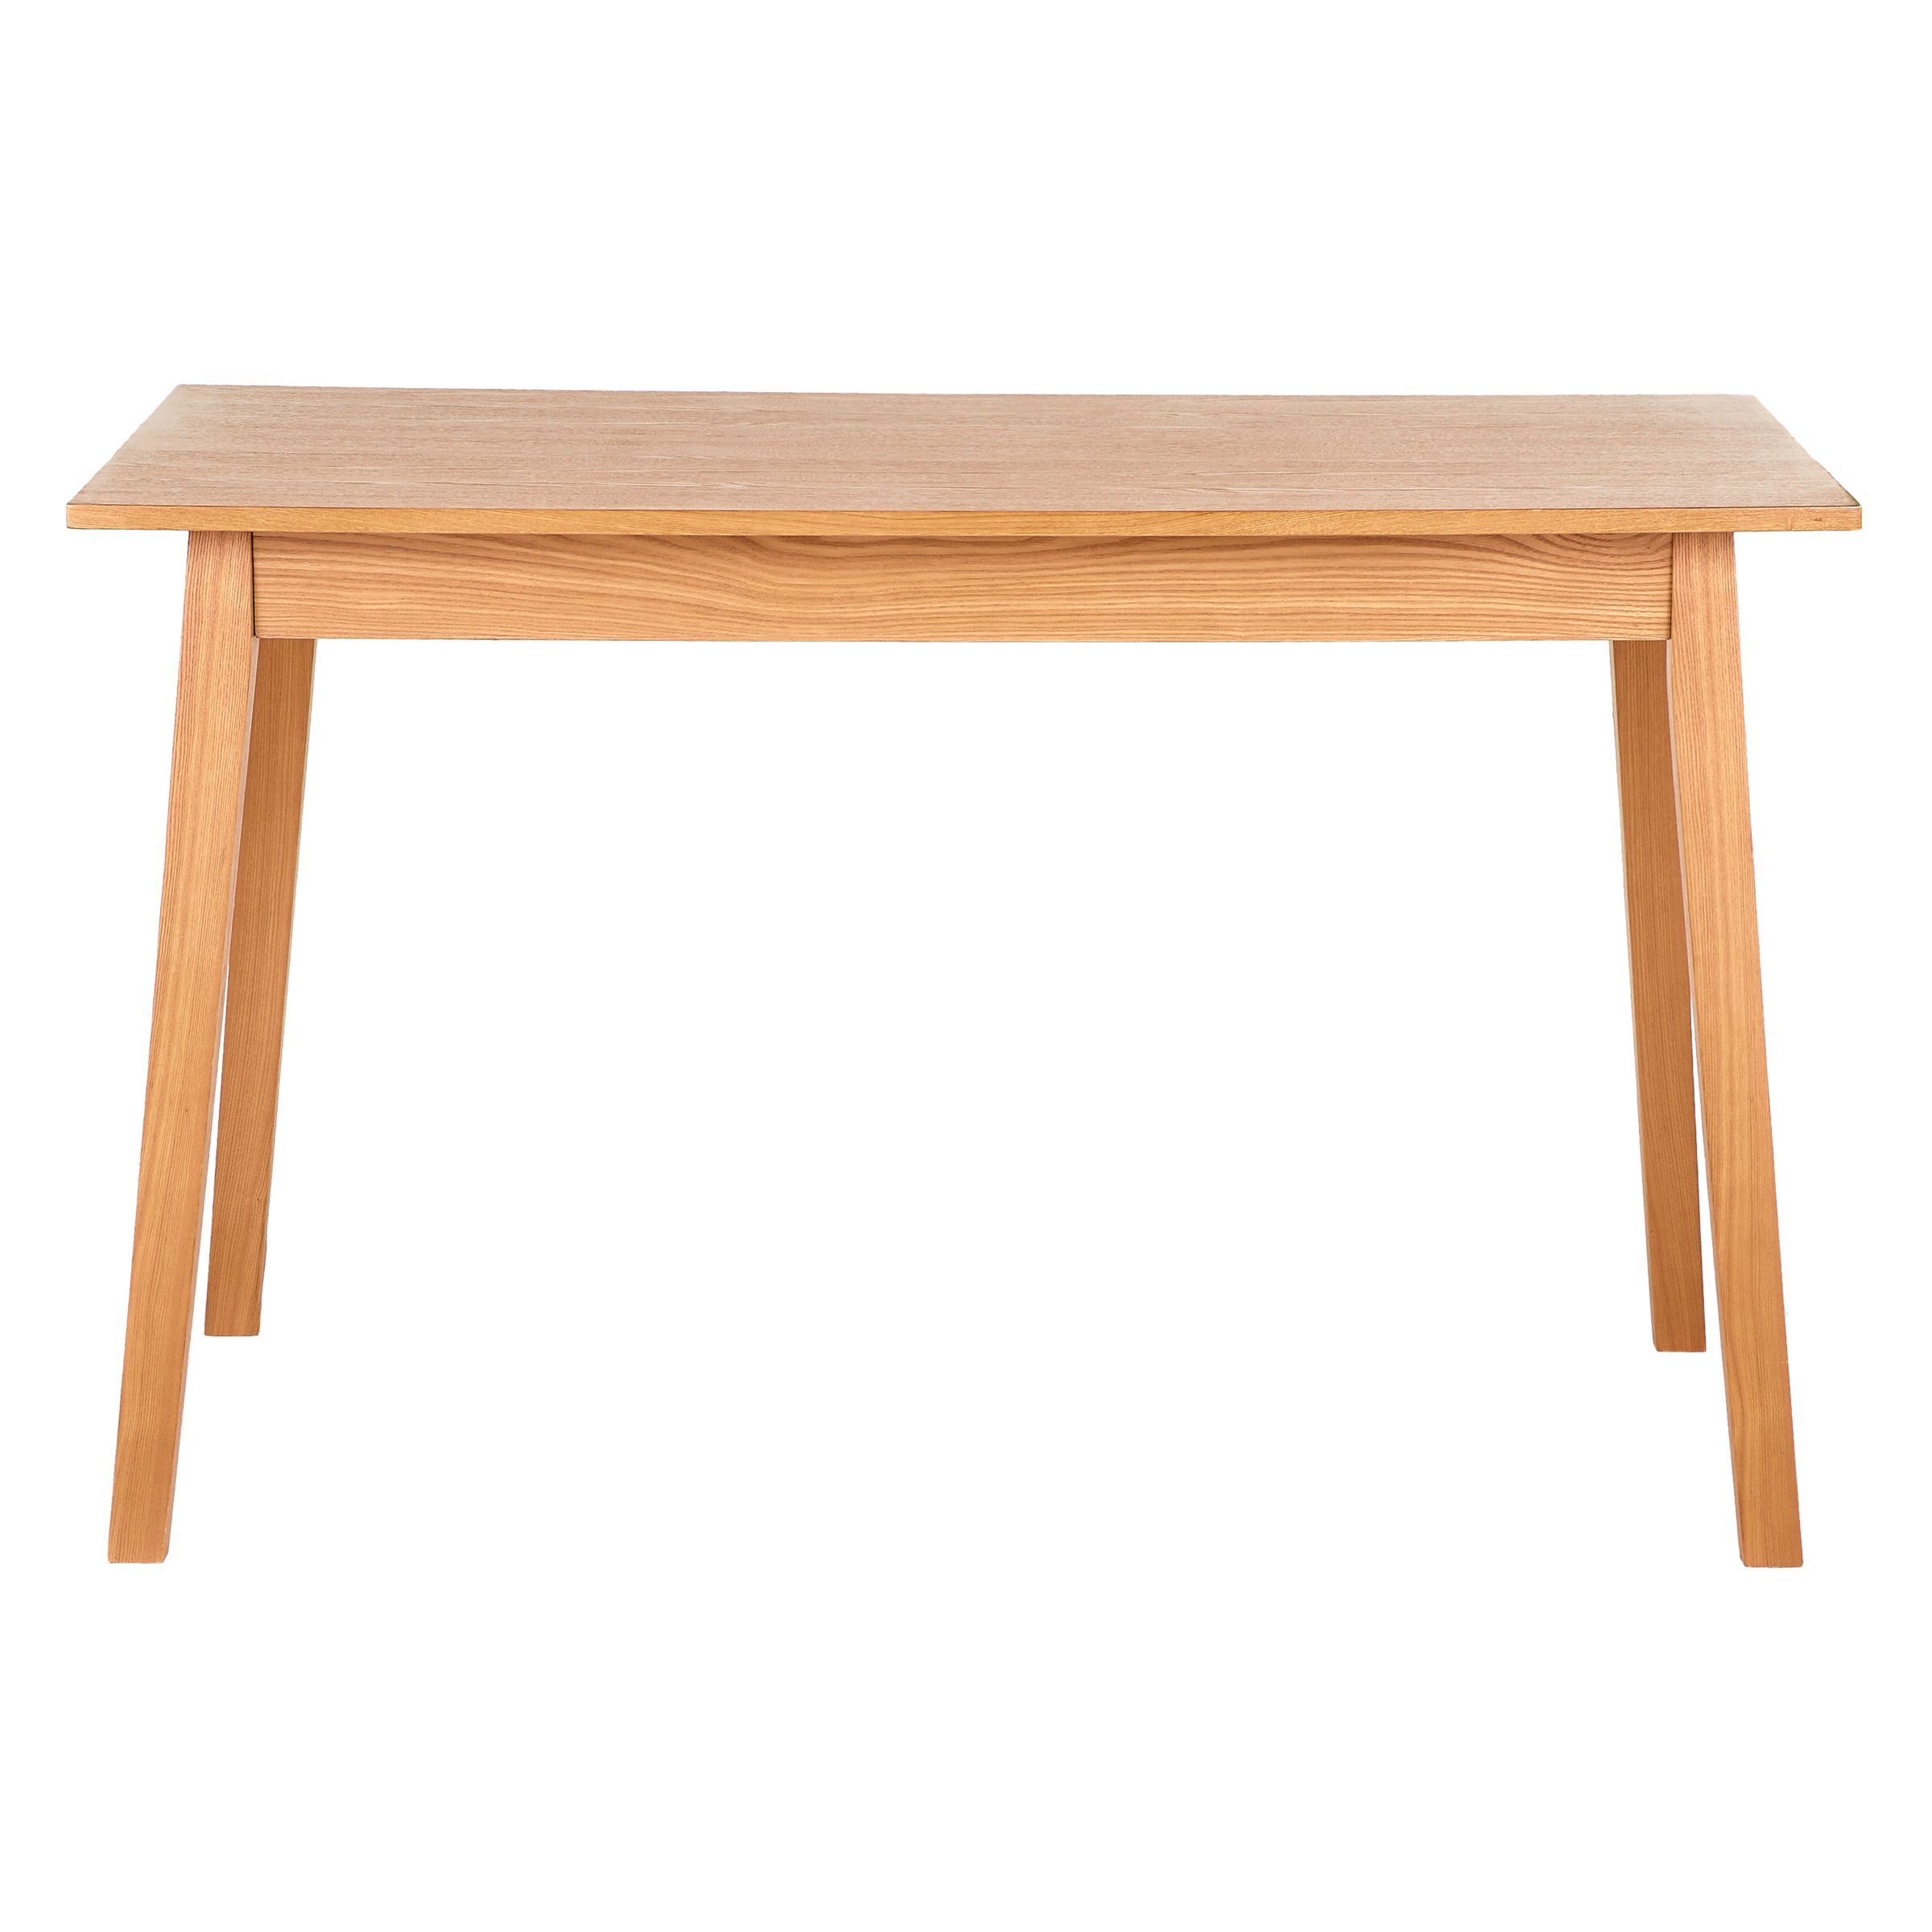 John Lewis Swift Rectangular 4 Seater Dining Table, Wood, width 120cm